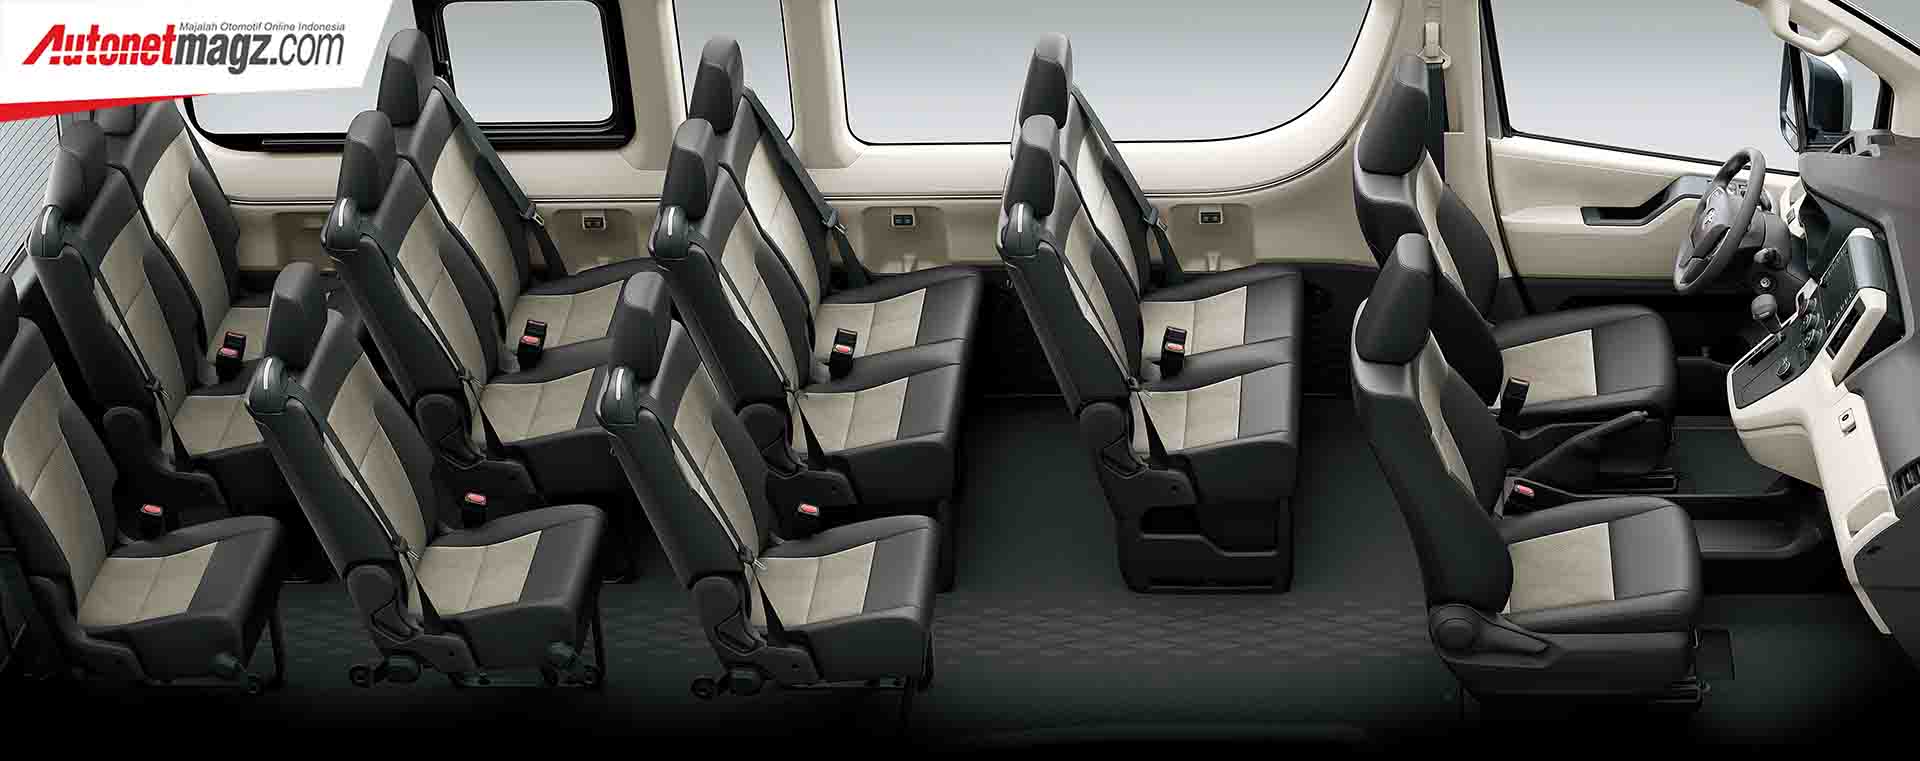 All New Toyota HiAce 13 seater | AutonetMagz :: Review Mobil dan Motor ...